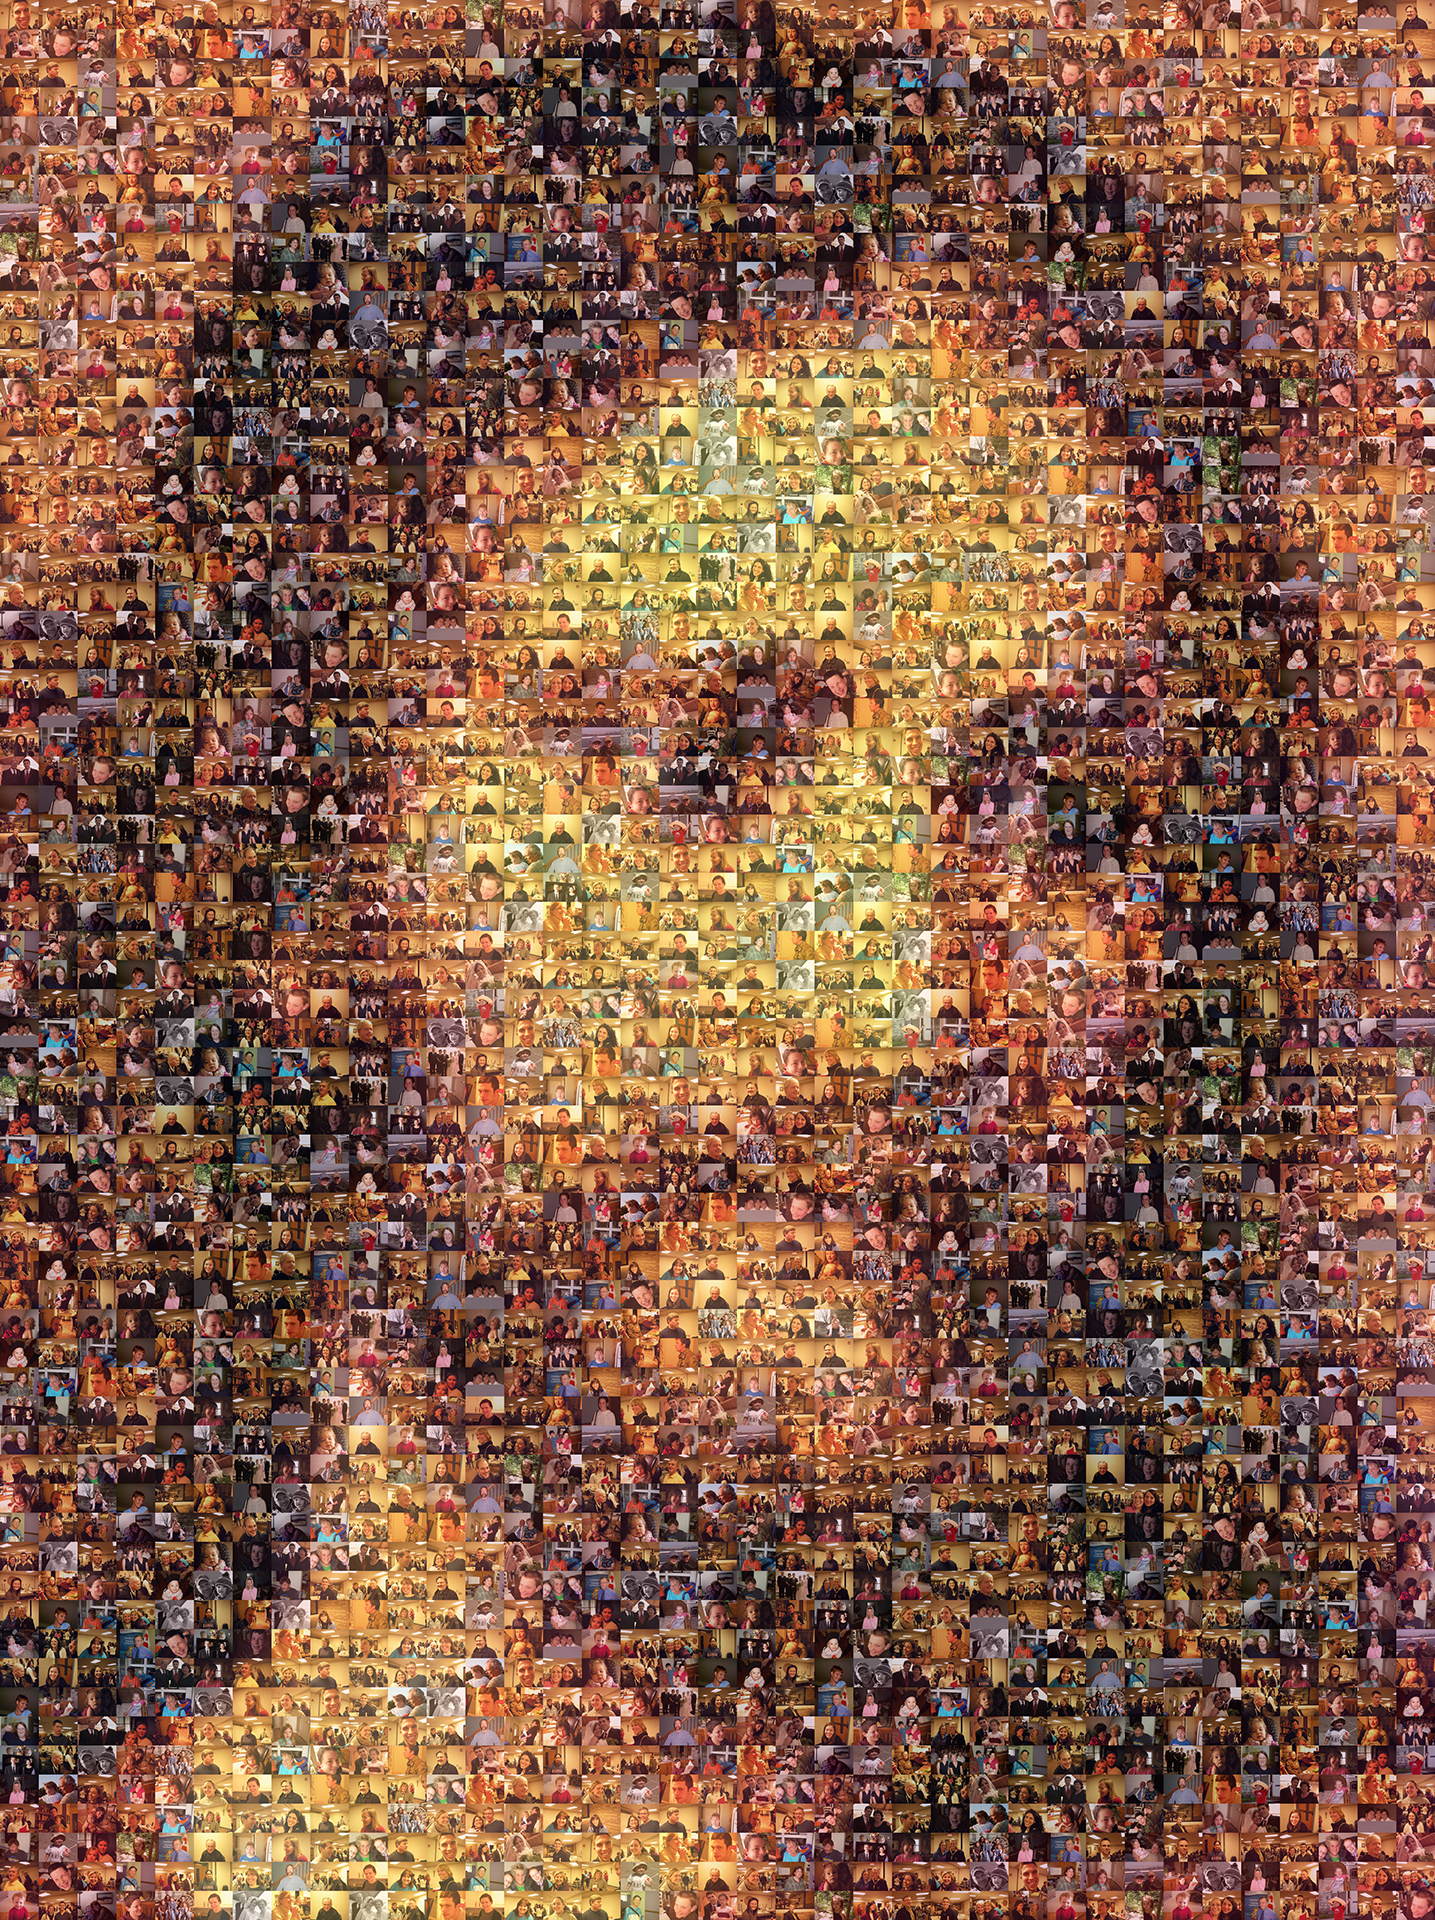 photo mosaic created using only 106 church photos